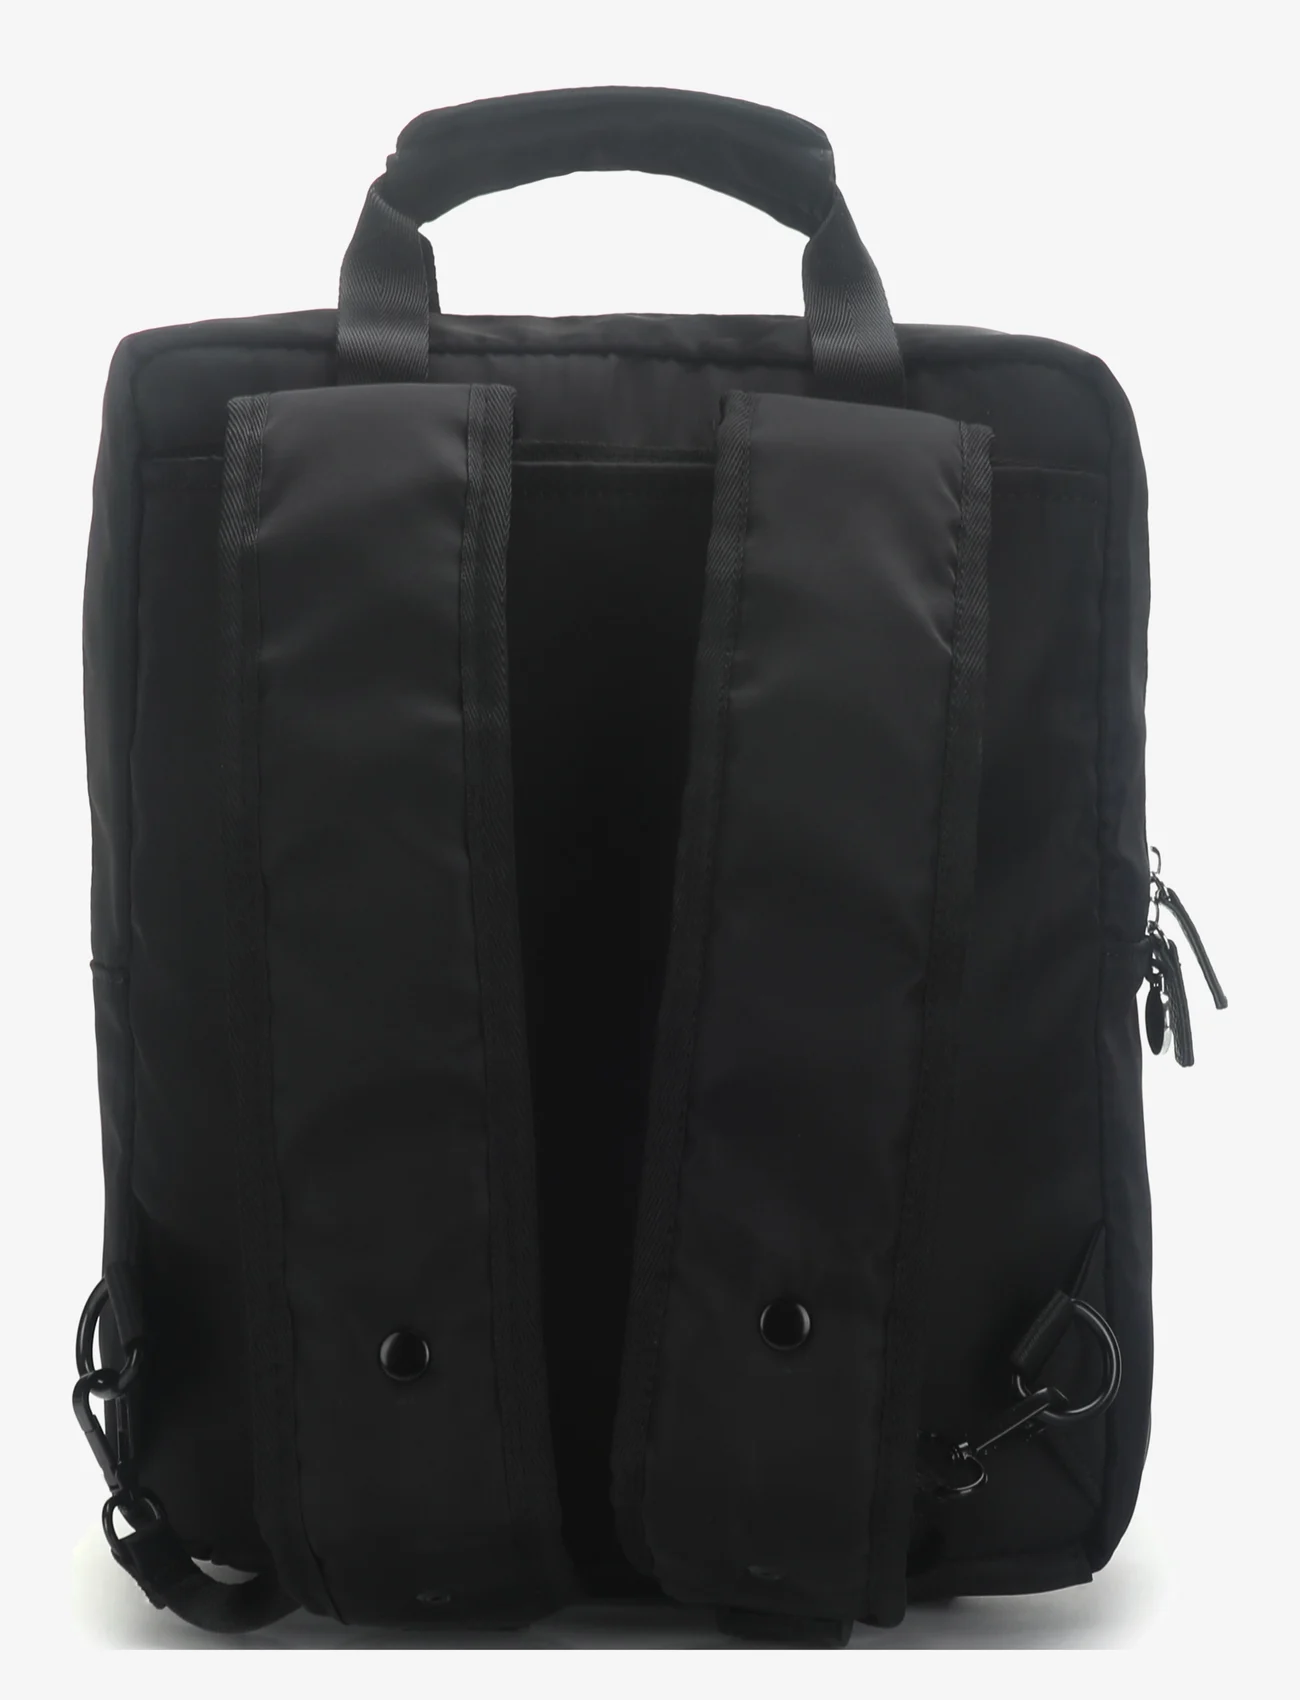 Adax - Novara backpack Max - women - black - 1